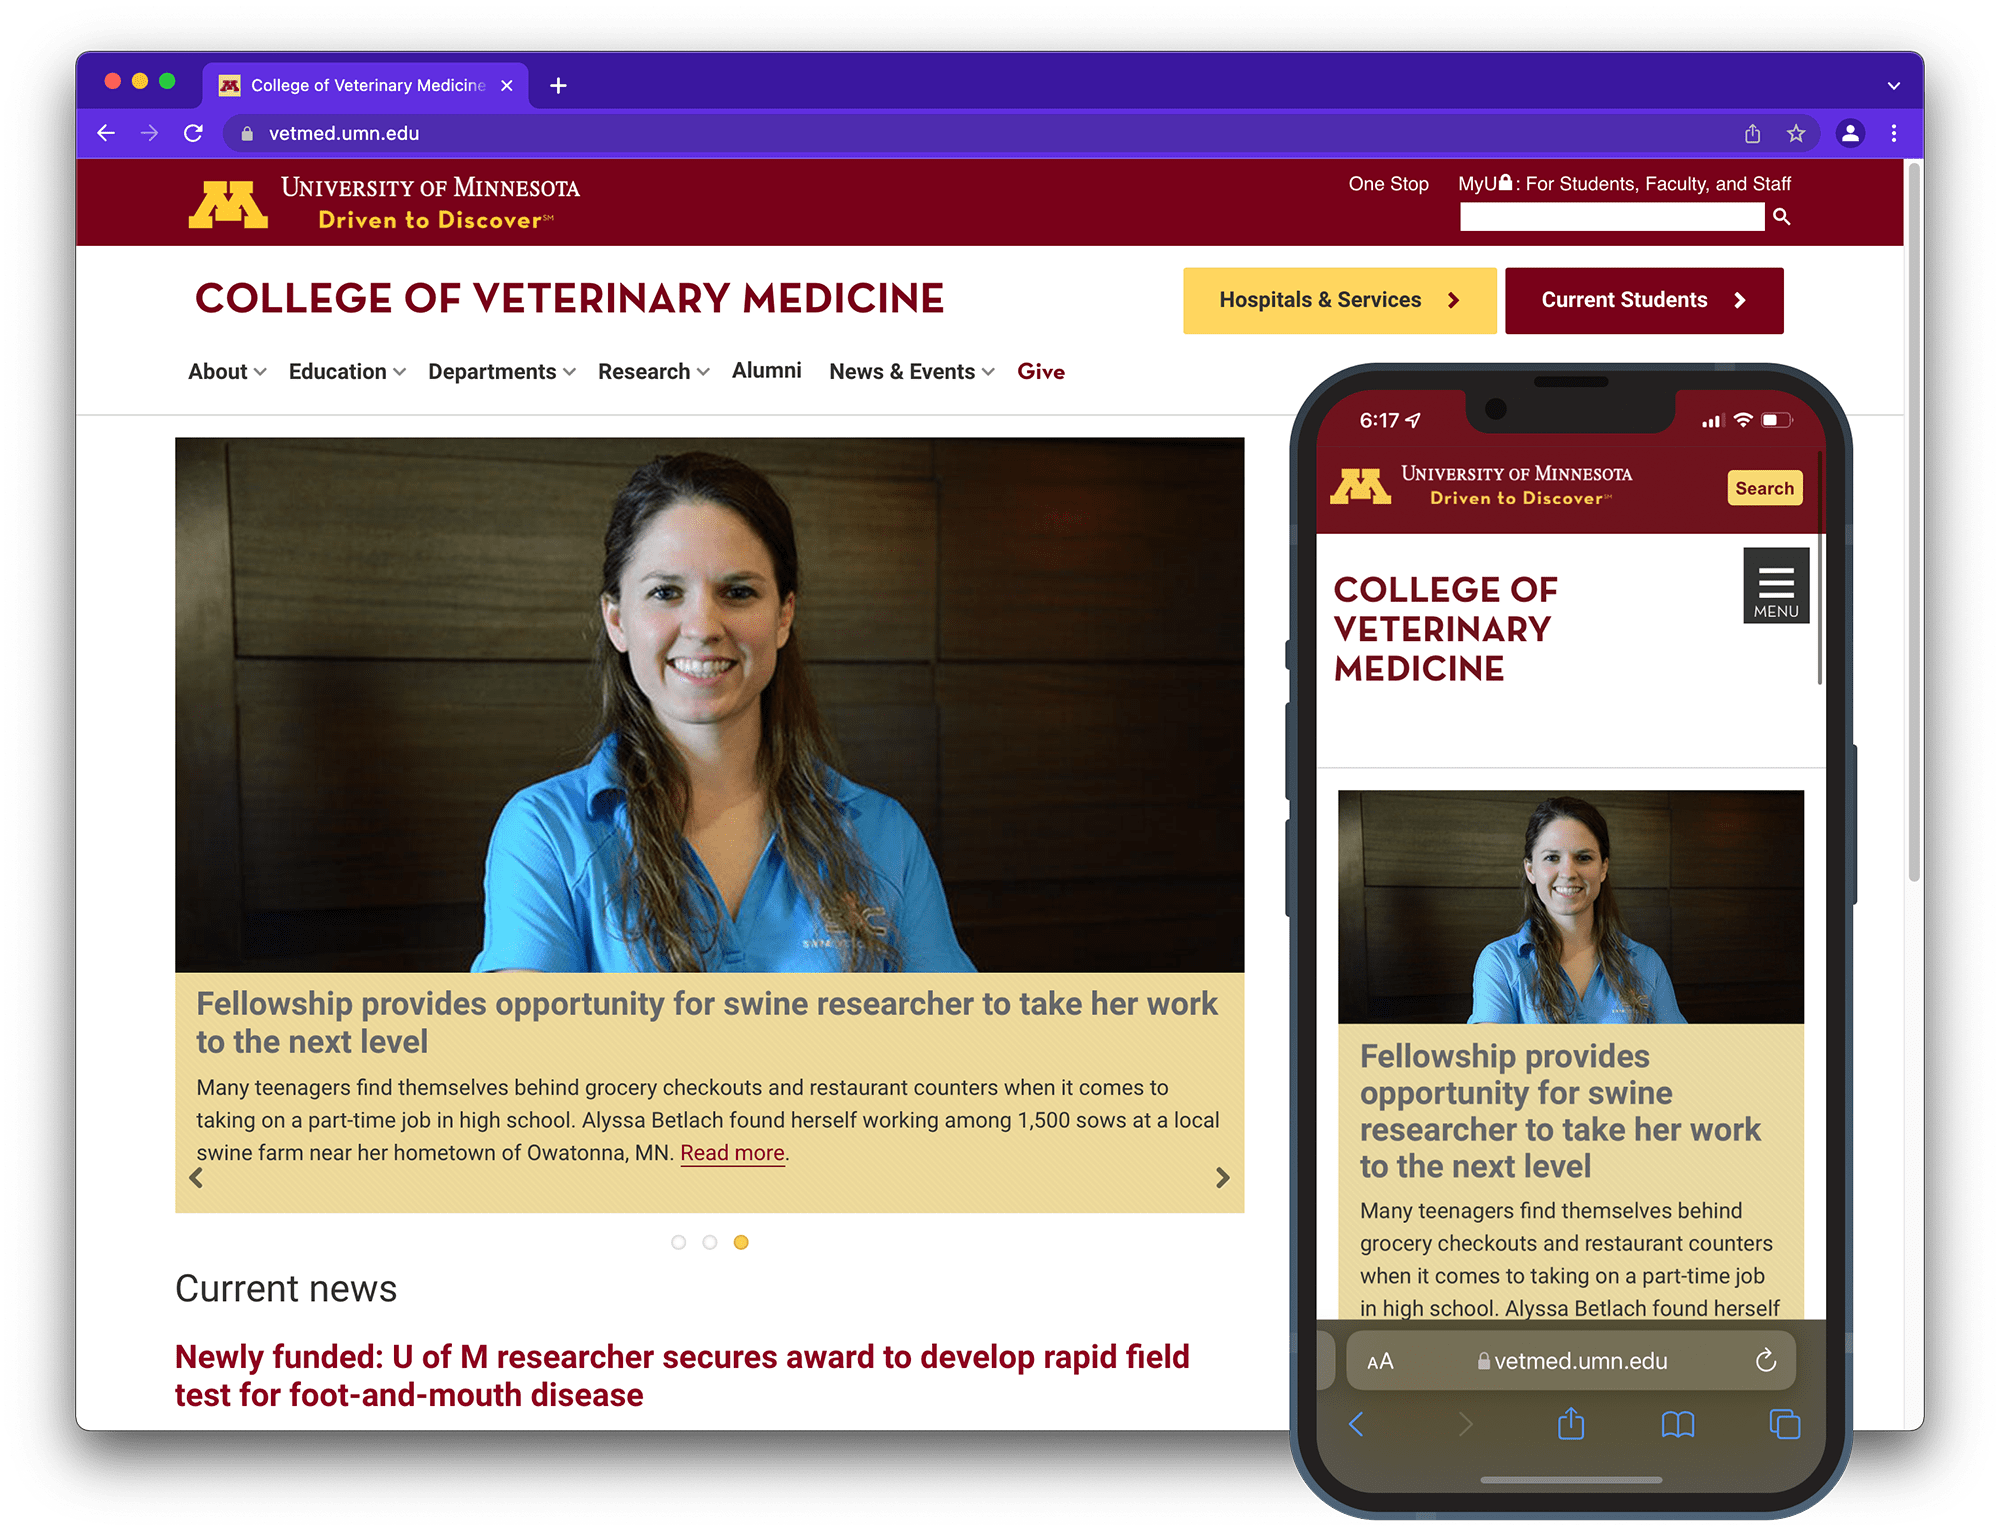 University of Minnesota College of Veterinary Medicine website